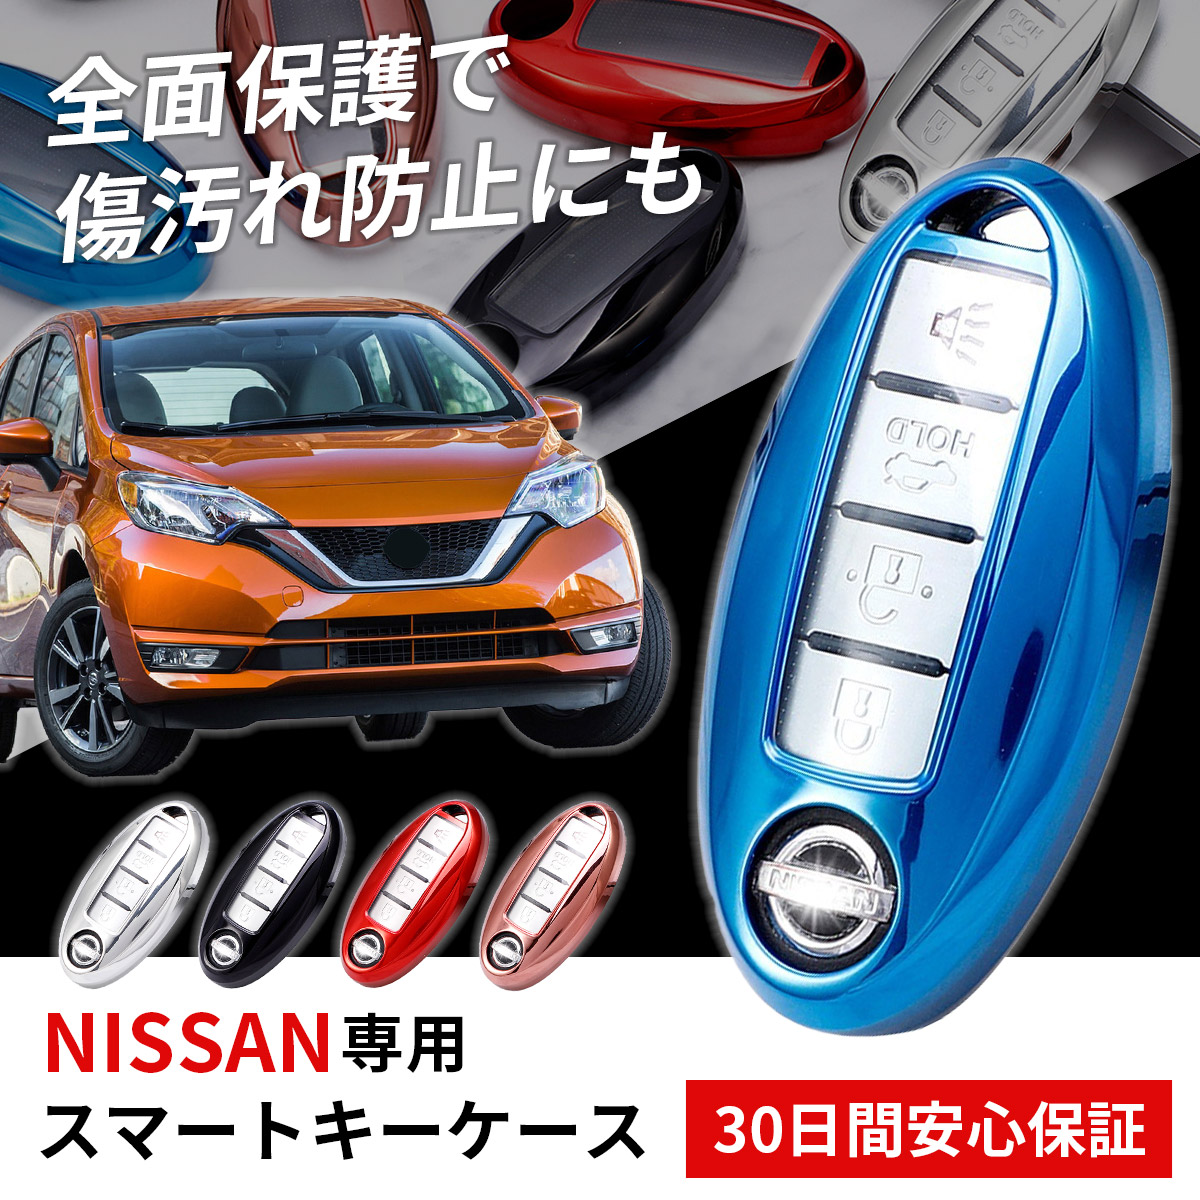  "умный" ключ кейс Note leaf X-trail NISSAN Nissan "умный" ключ покрытие Dayz Serena Roox Elgrand модный 